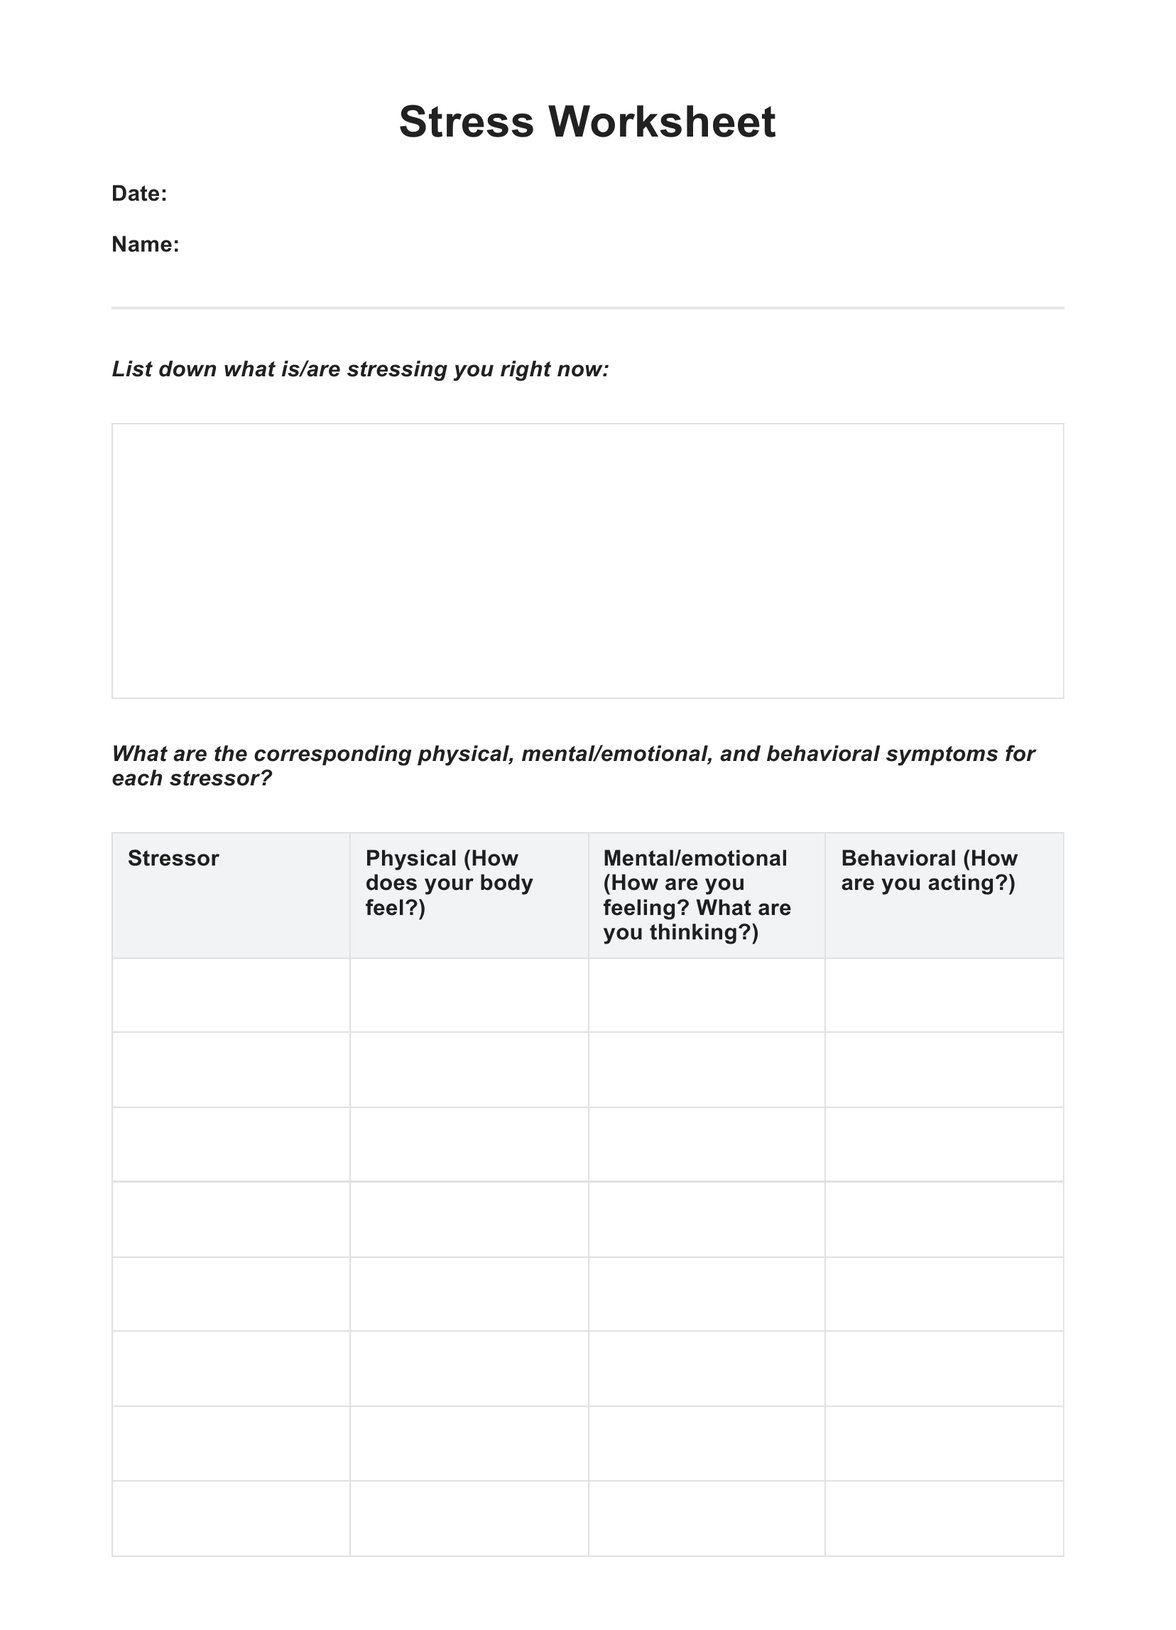 Stress Worksheet PDF Example